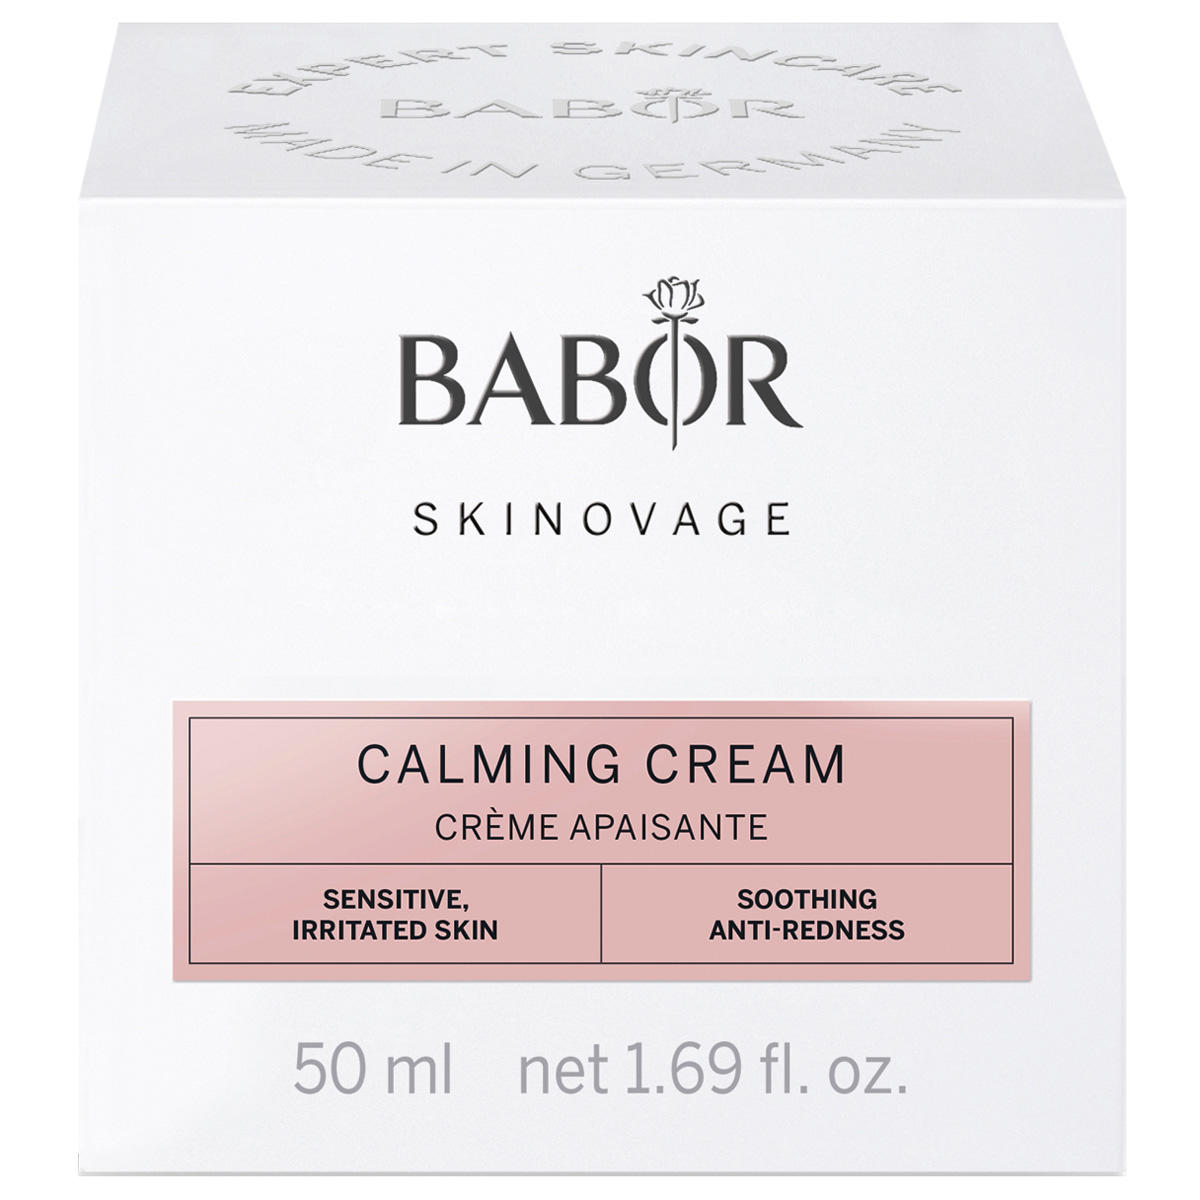 BABOR SKINOVAGE Calming Cream 50 ml - 2